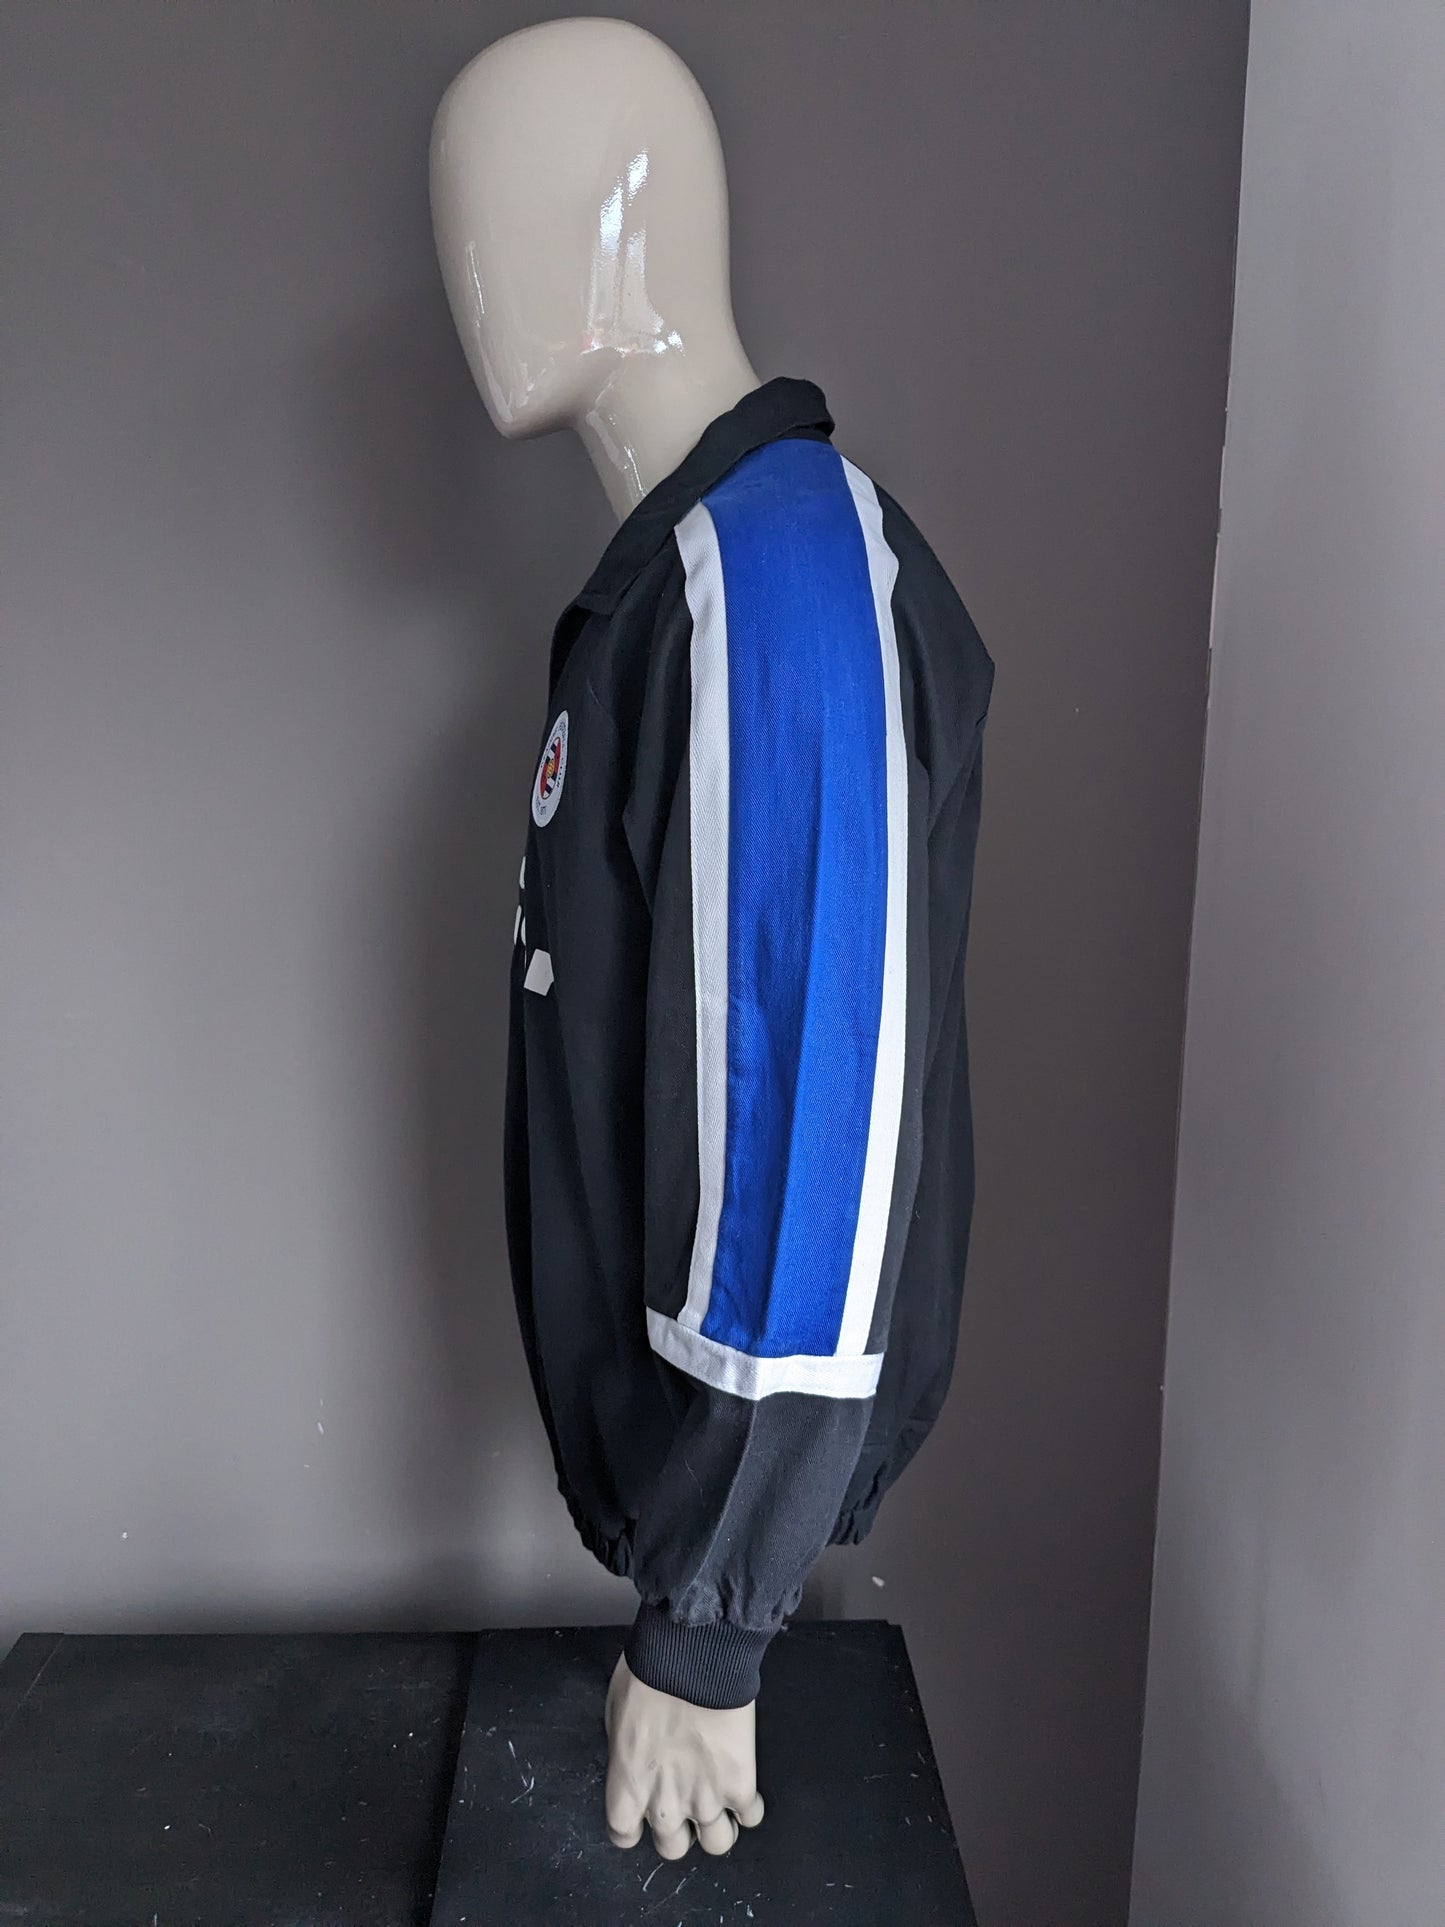 Mizuno Original "Reading Football Club" Polo Sweater. Black white blue colored. Size XL